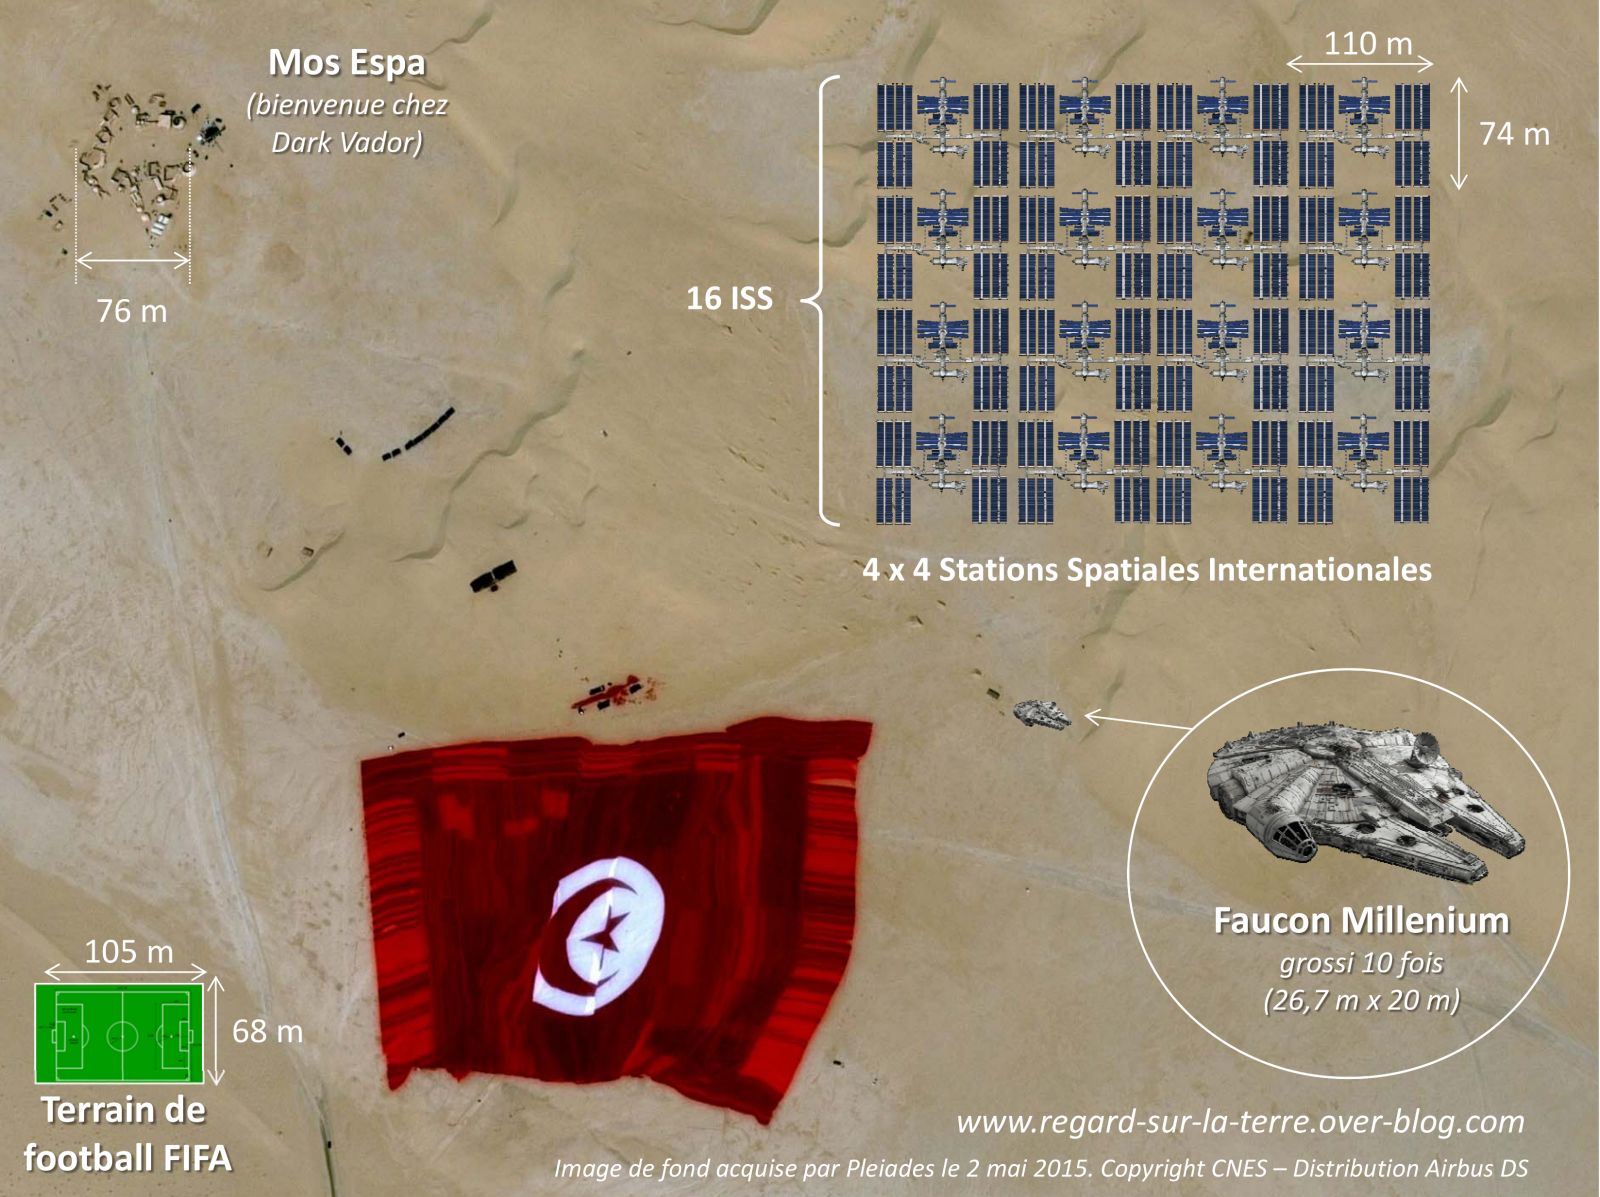 Tunisie - Record du plus grand drapeau - Guinness - Satellites Pléiades - Terrain de football - ISS - Faucon millénium - Mos Espa - Dark Vador - Star Wars - CNES - Airbus Defence and Space